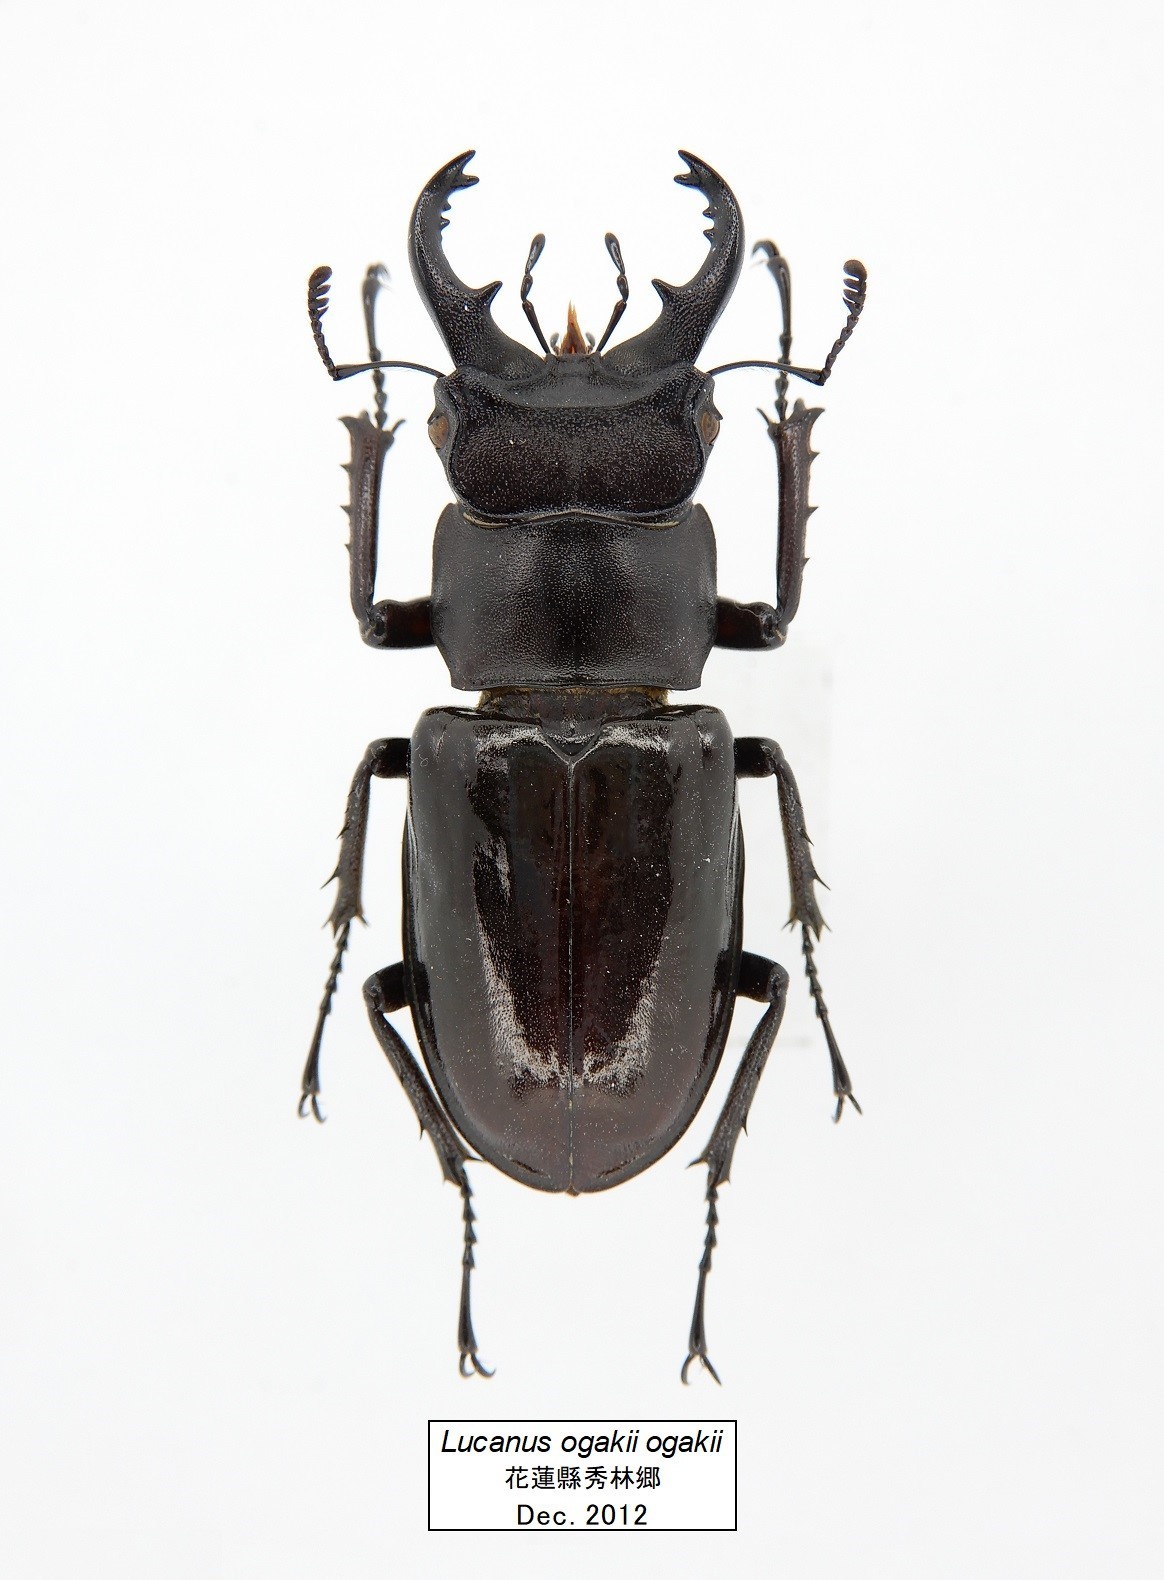 Lucanus ogakii ogakii クロアシミヤマ（原名亜種）: Beetles Breeding